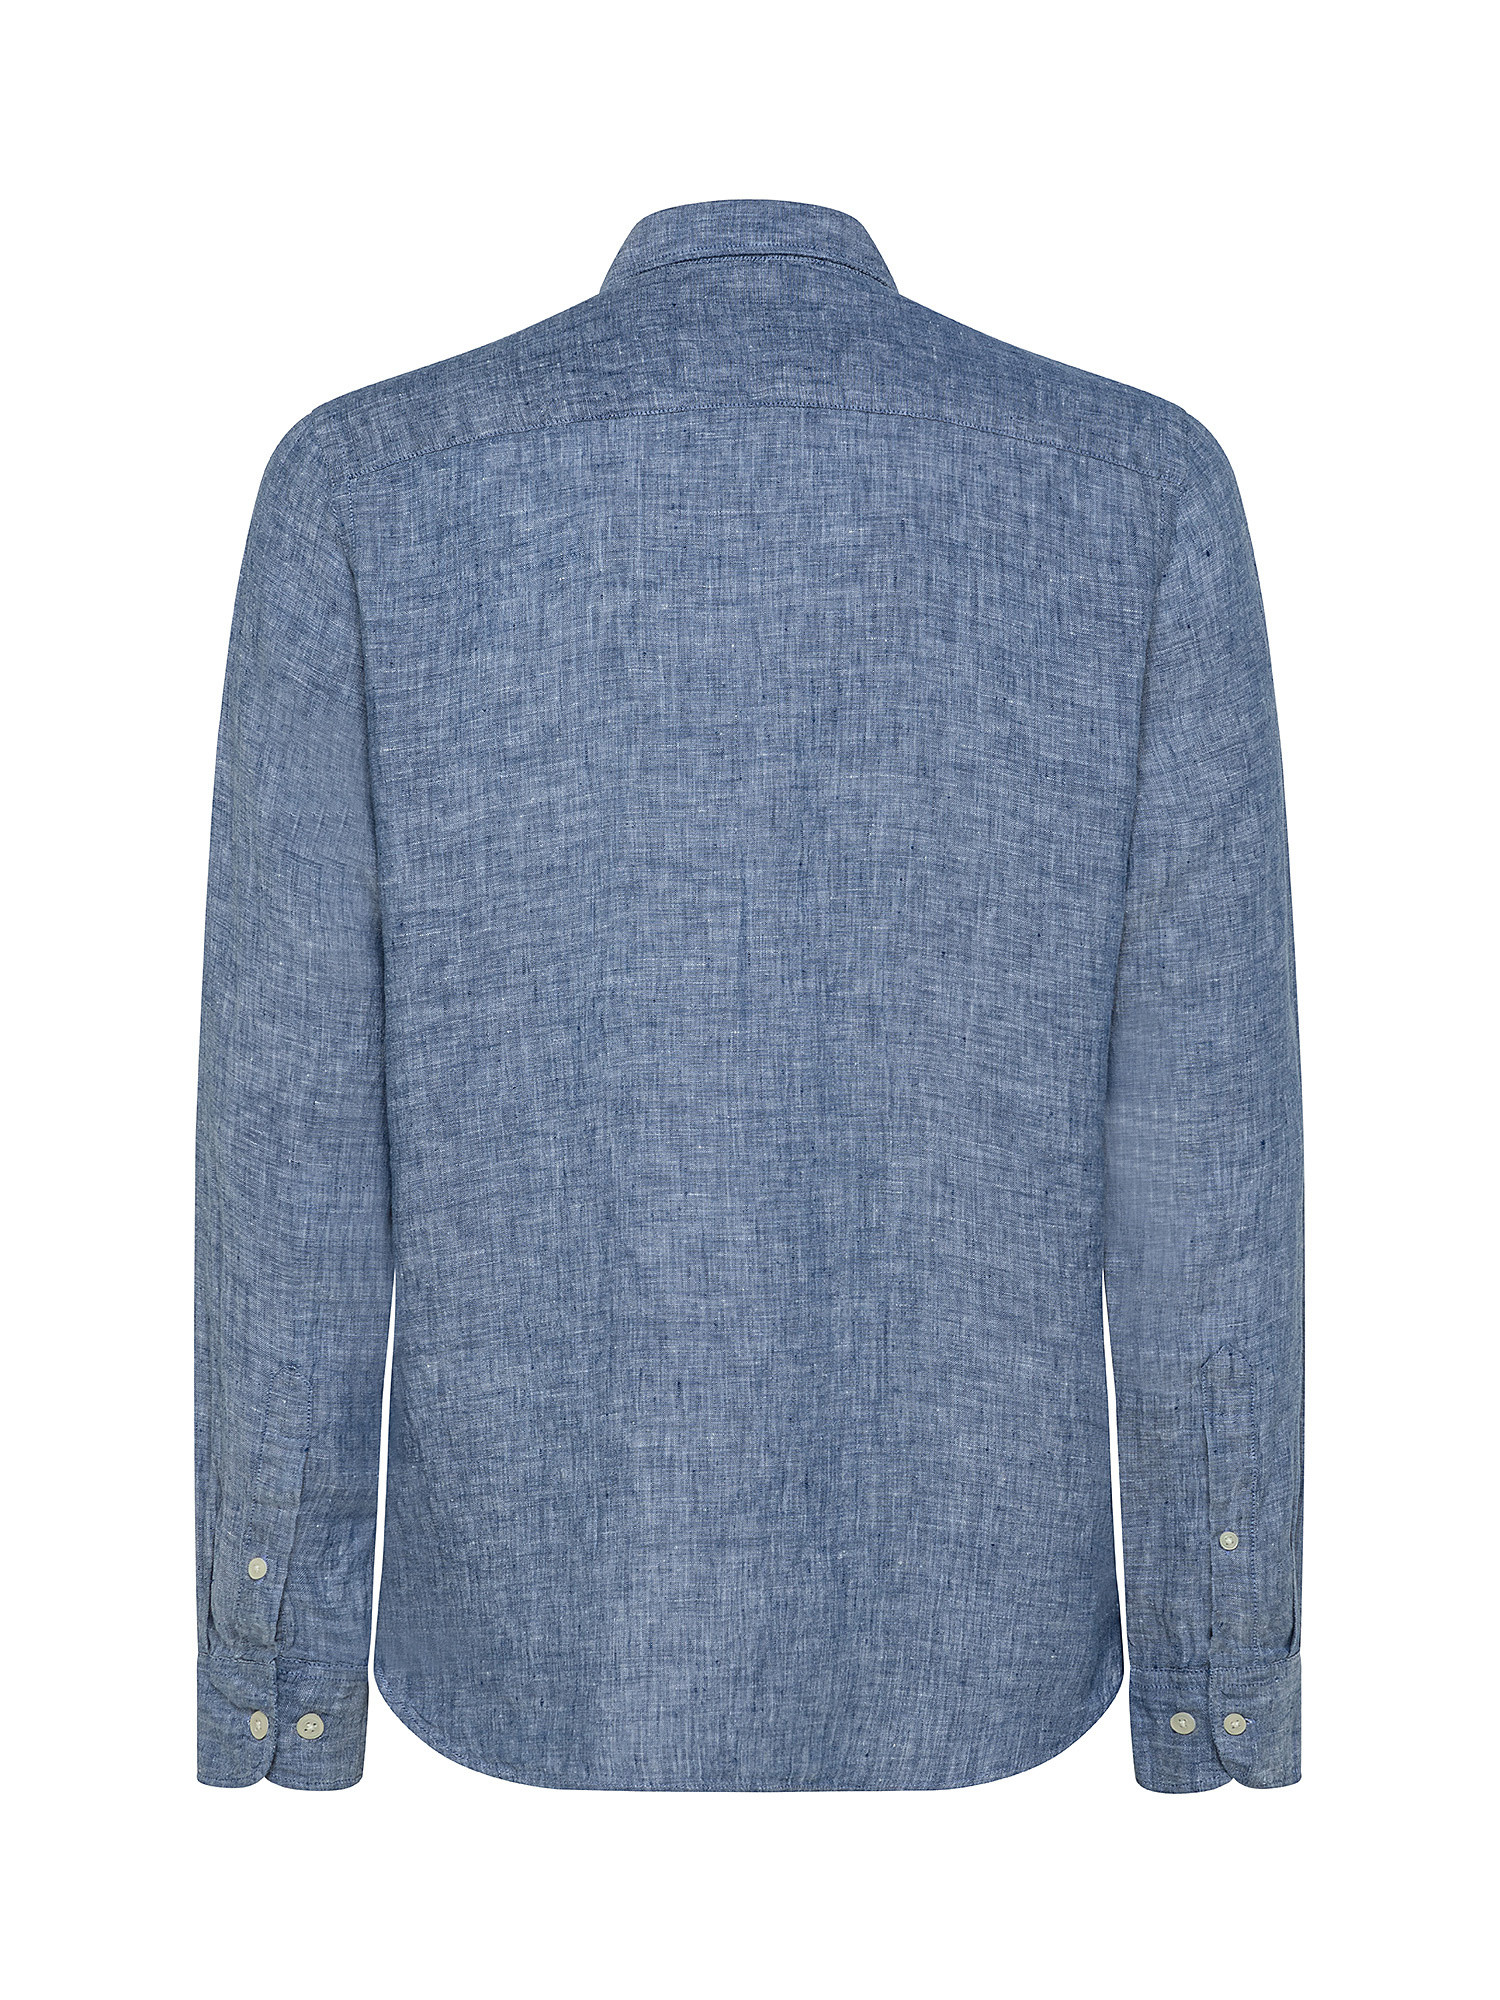 Camicia puro lino collo francese, Blu, large image number 1